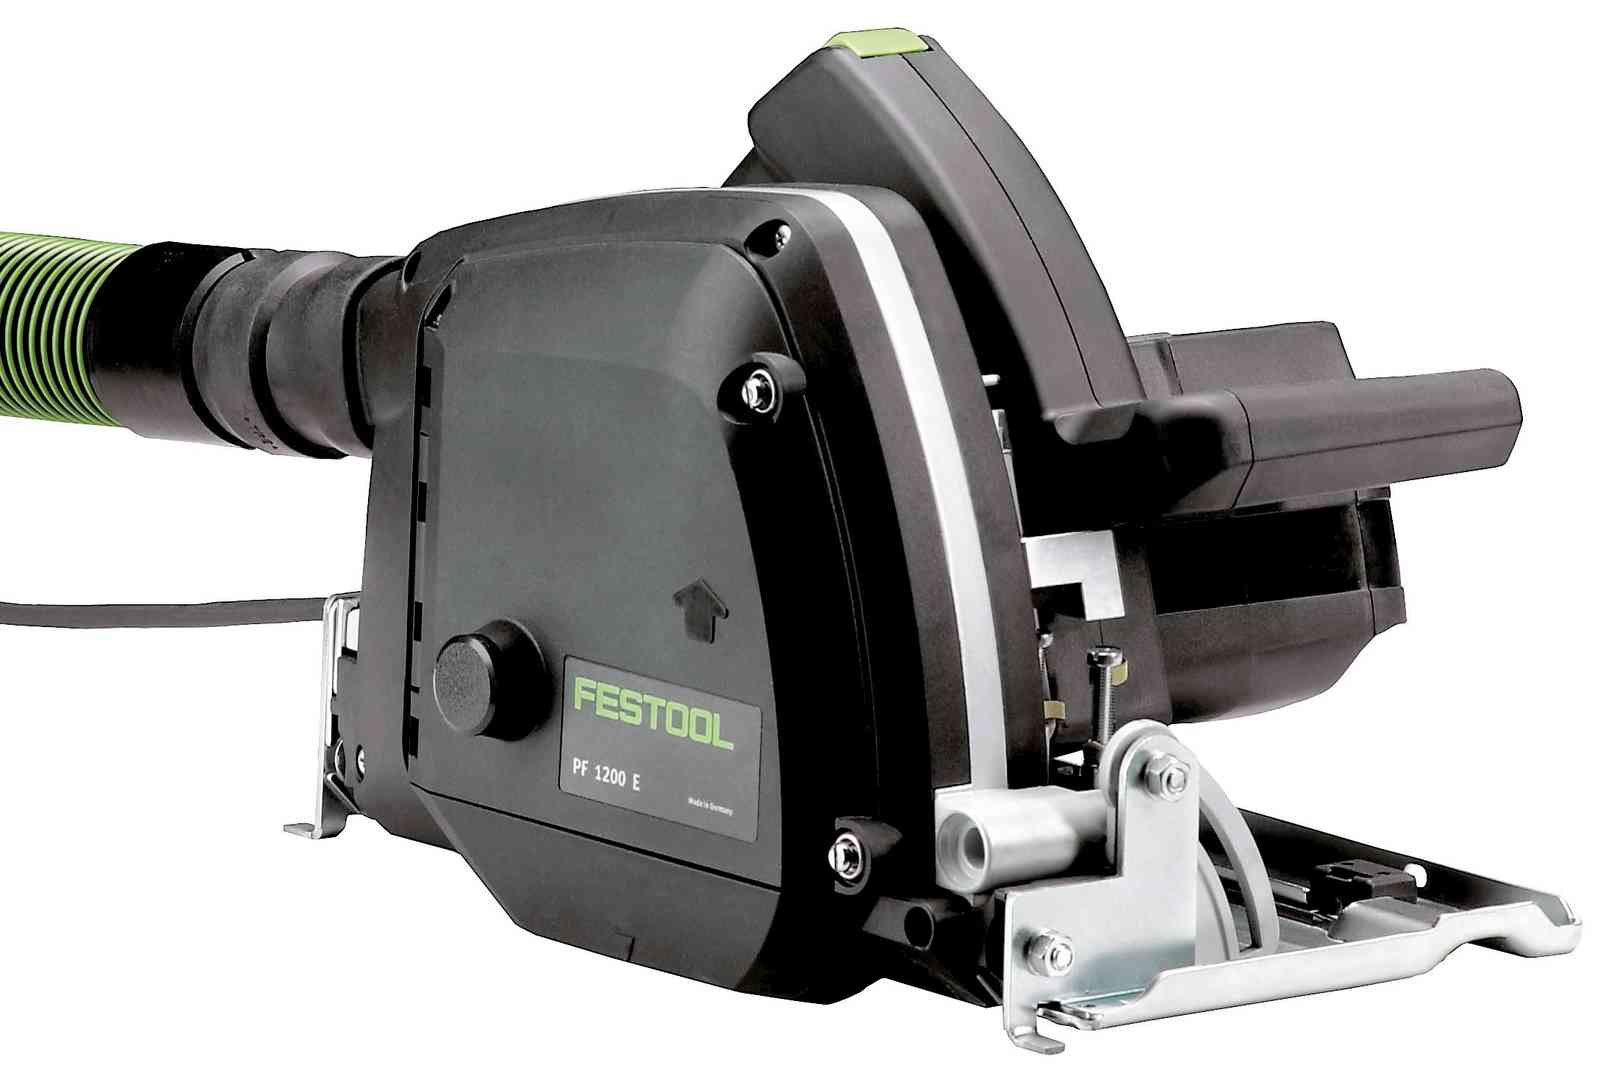 Festool Aluminum Milling Machine Pf 1200 E-Plus Alucobond 574321 Power Tool Services